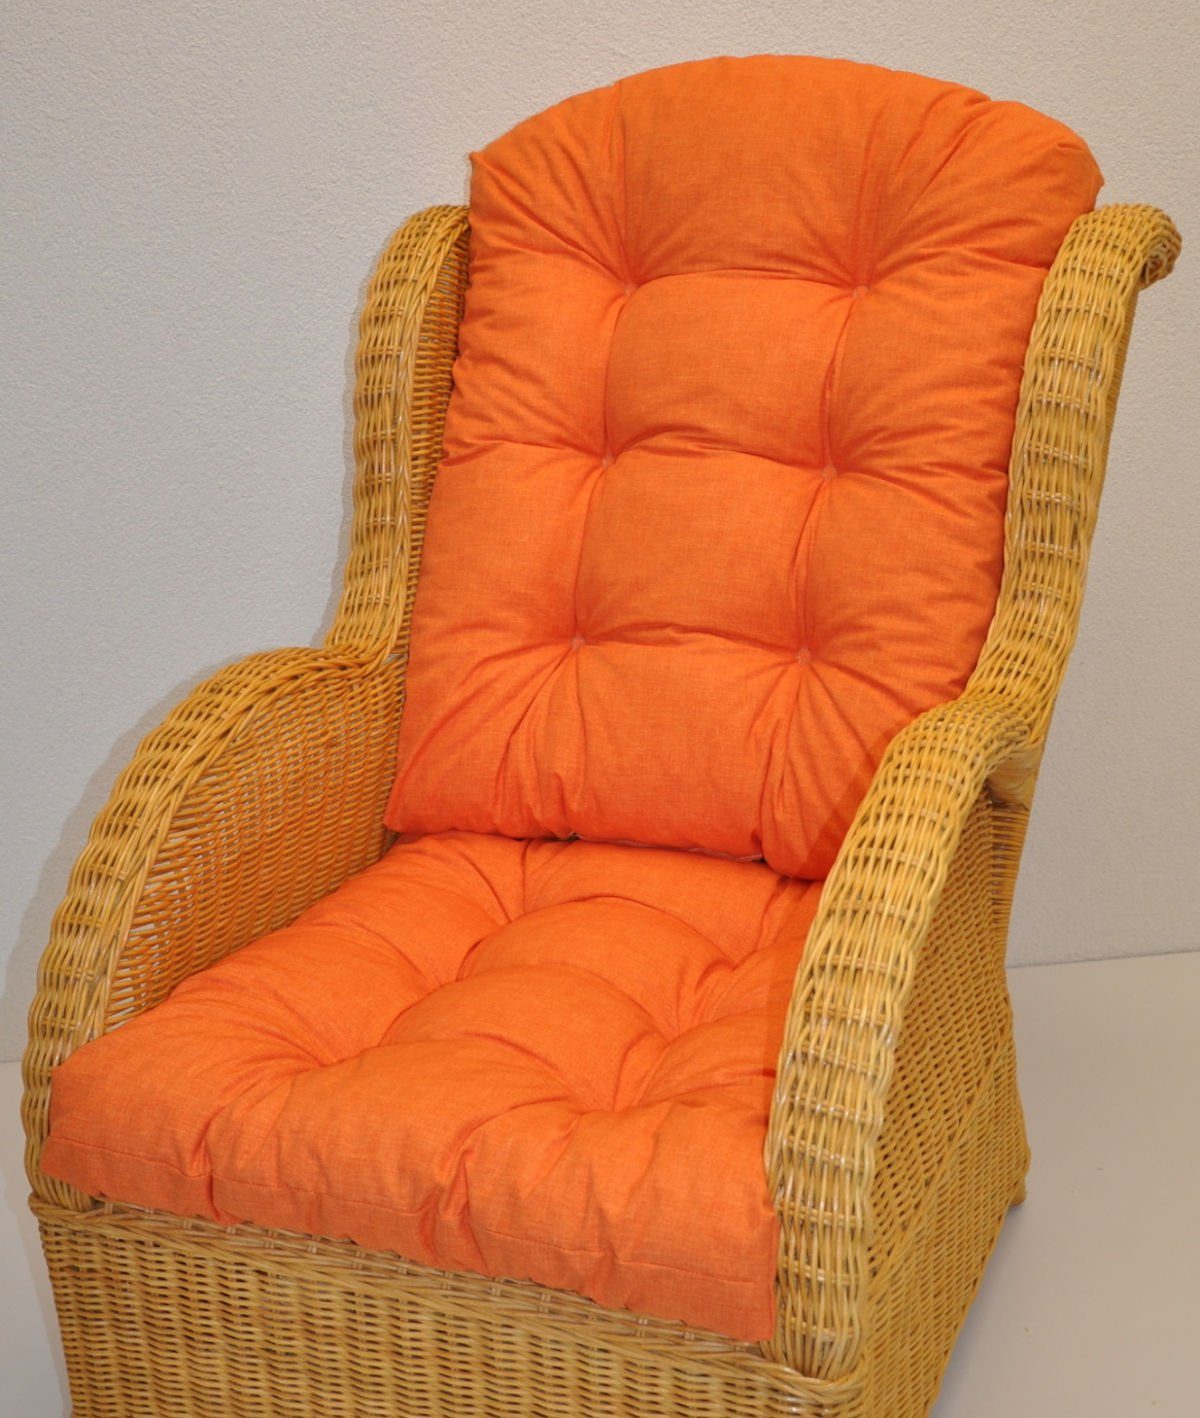 Rattani Sesselauflage Polster Kissen für Rattan Ohrensessel Rattansessel, Color Orange